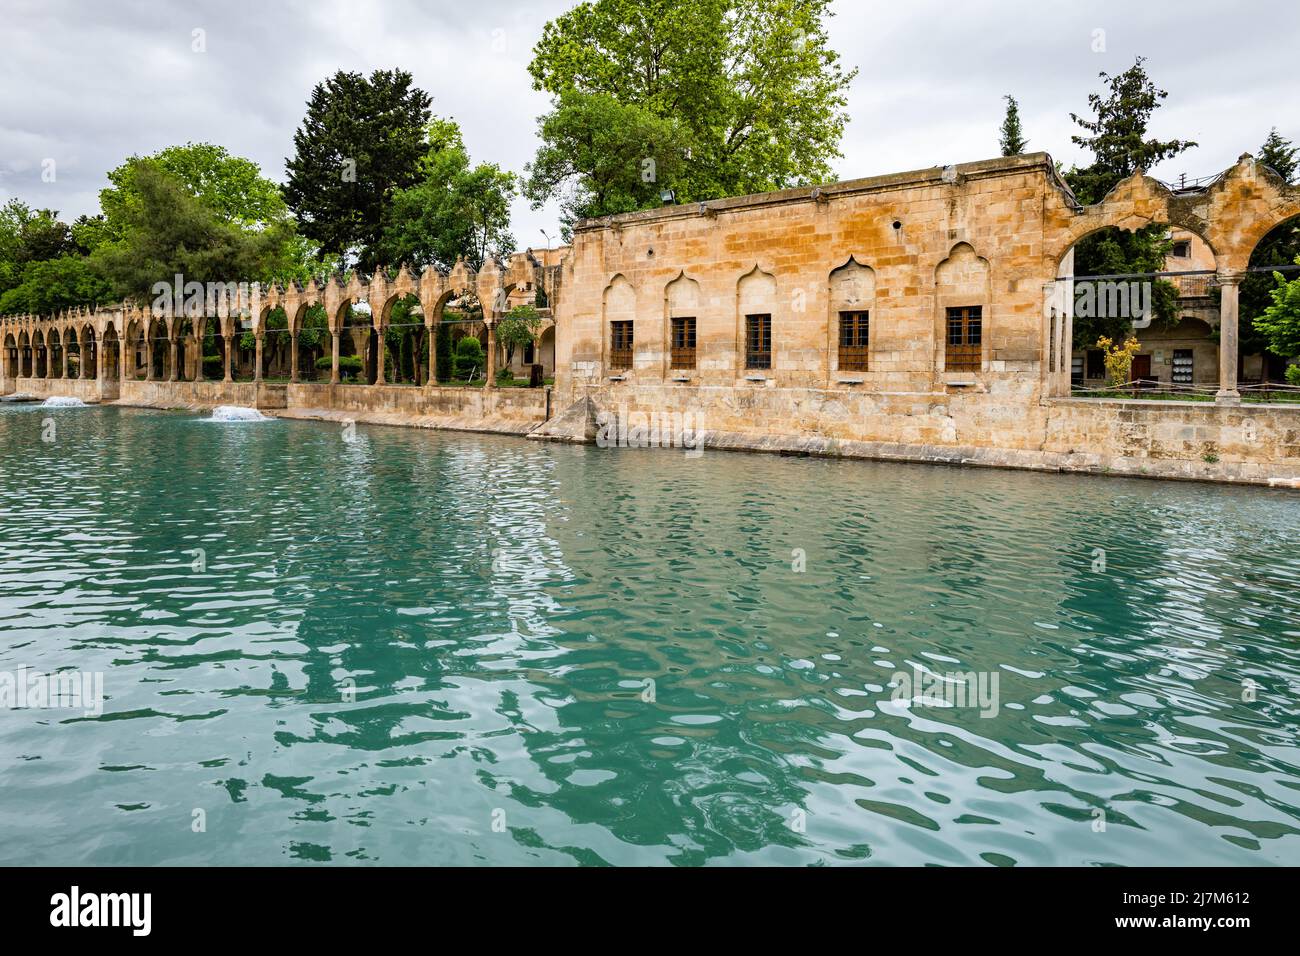 Balikligol (The Fish Lake in English) in Sanliurfa, Turkey. The historic Pool of Abraham, or Pool of Sacred Fishin the city of Urfa, Turkey Stock Photo